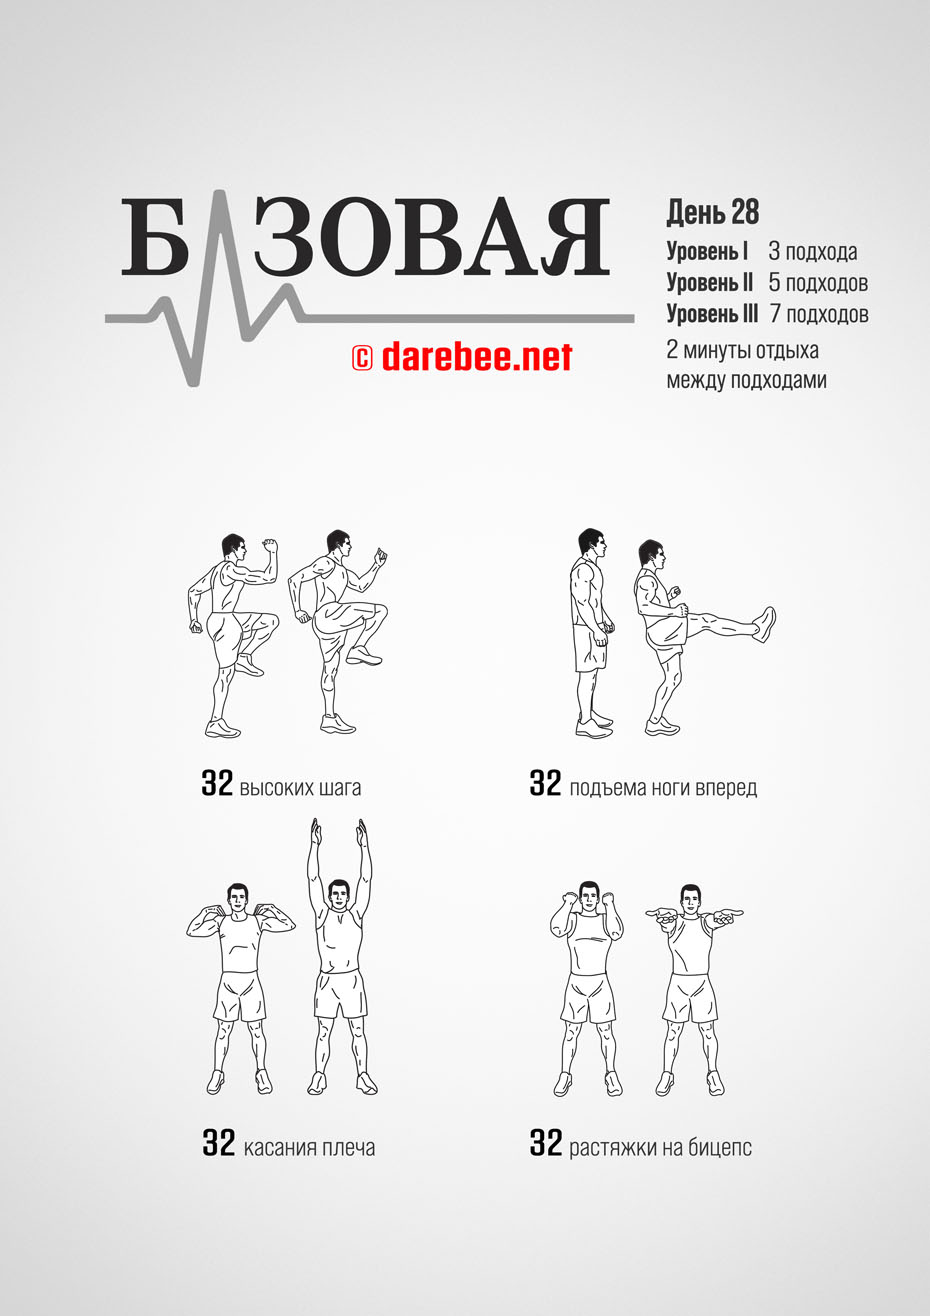 Baseline - 30 Day Low Impact Bodyweight Program